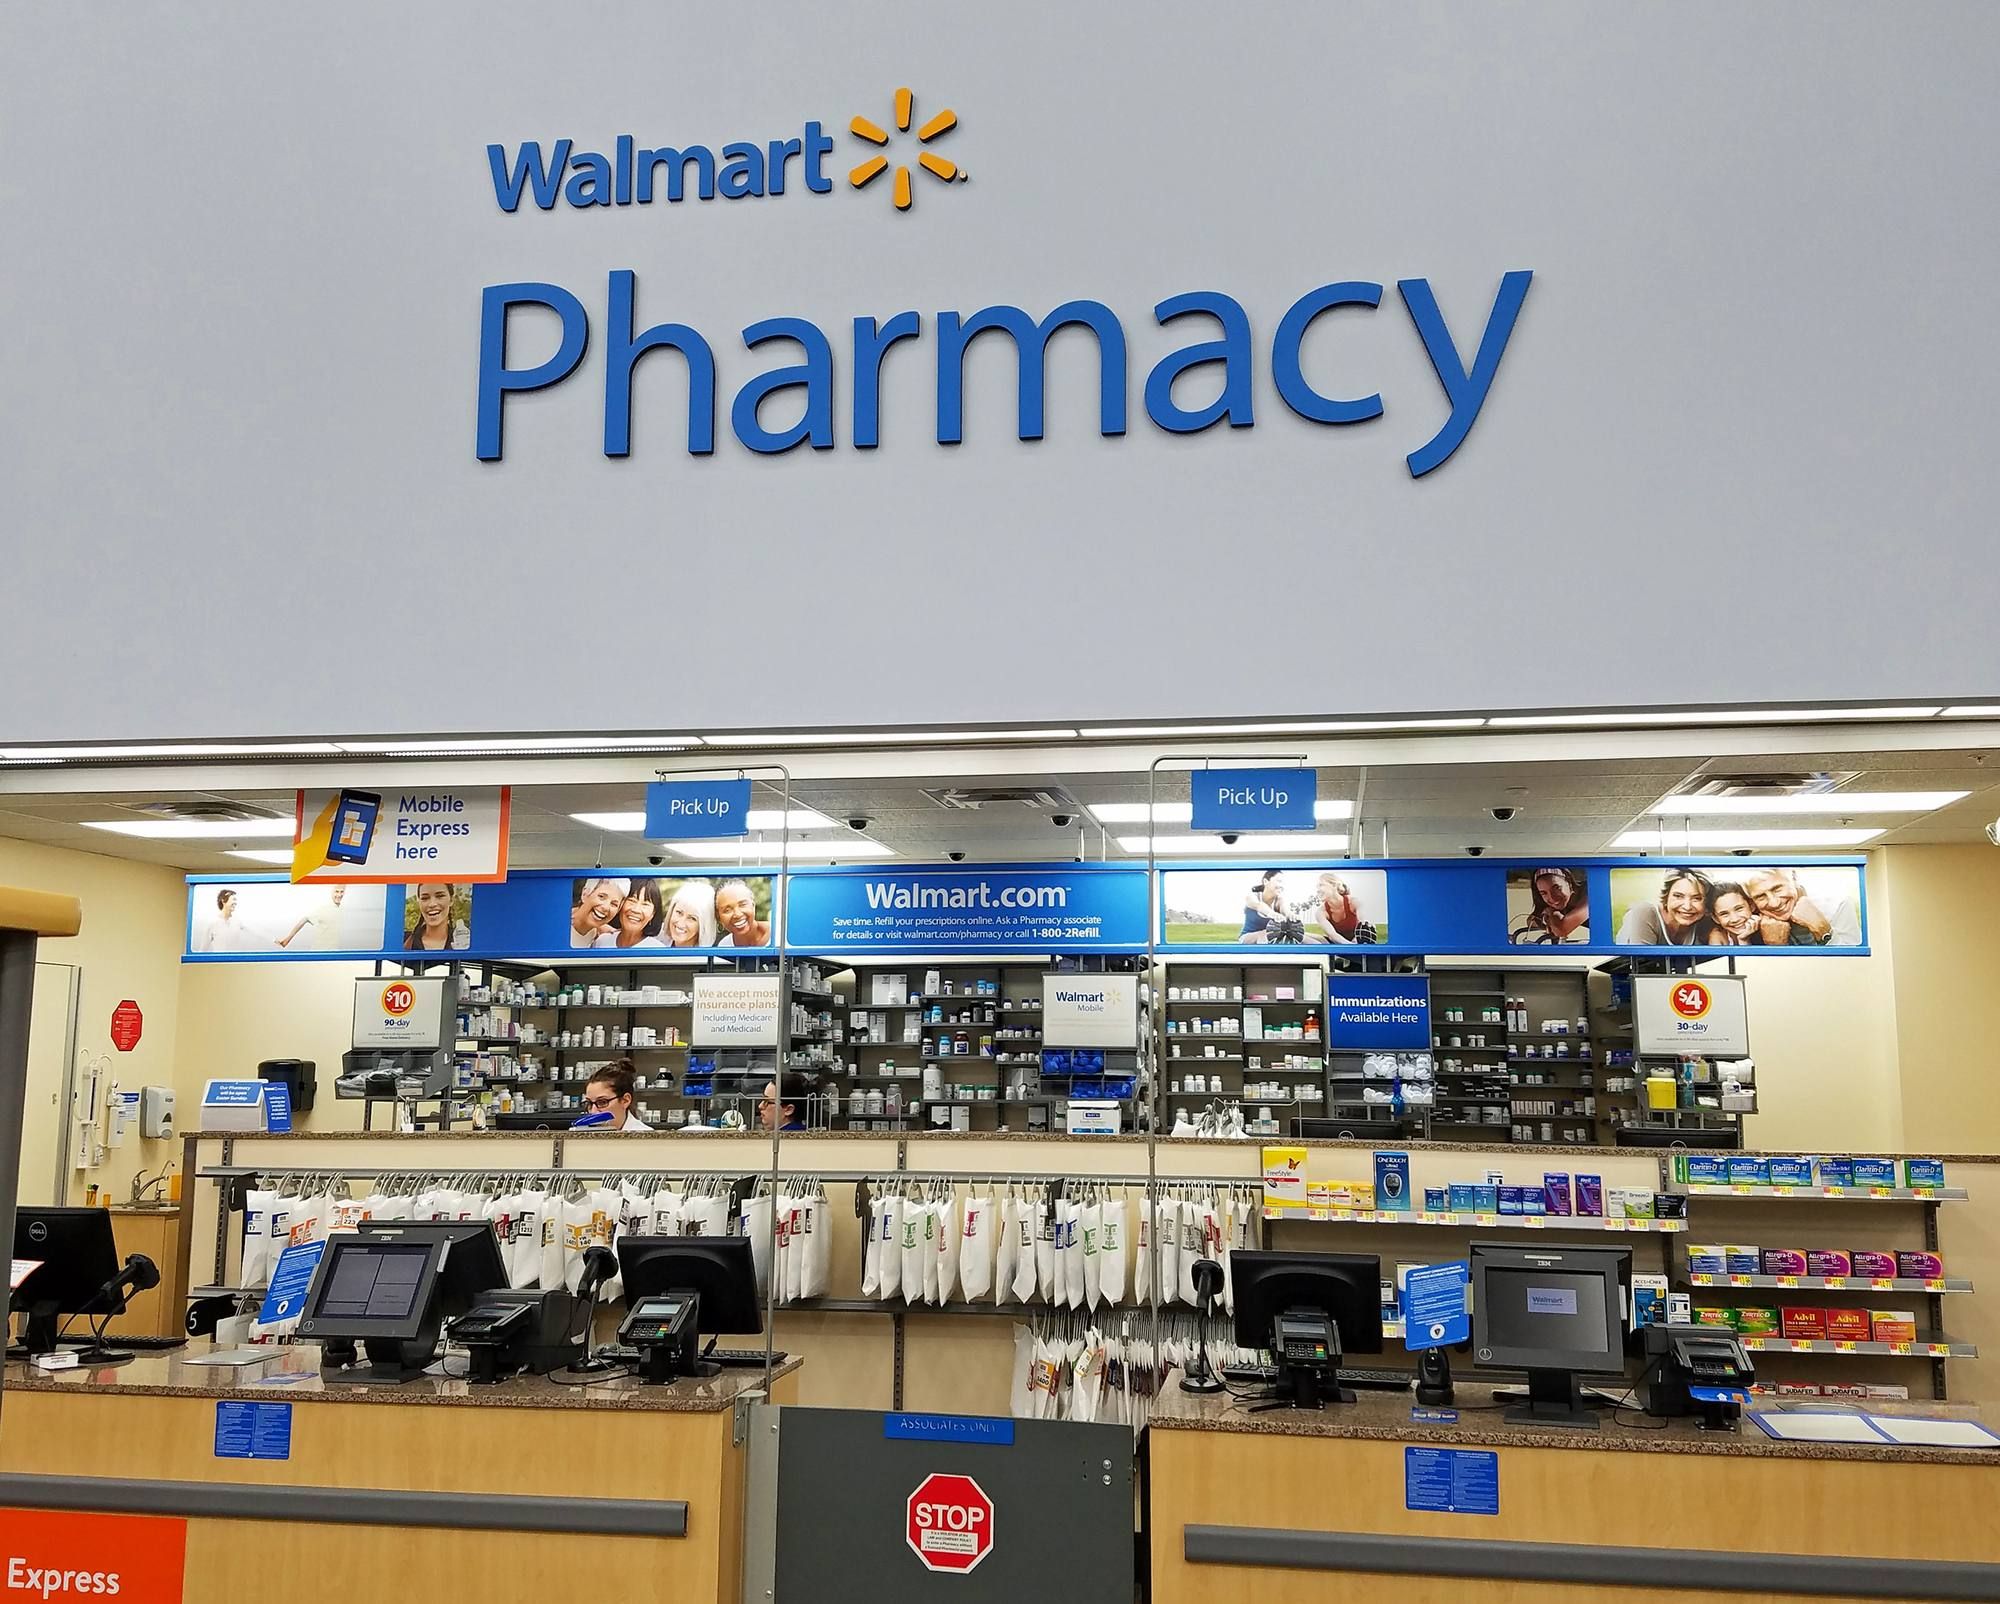 Walmart pharmacies being investigated by the DOJ.